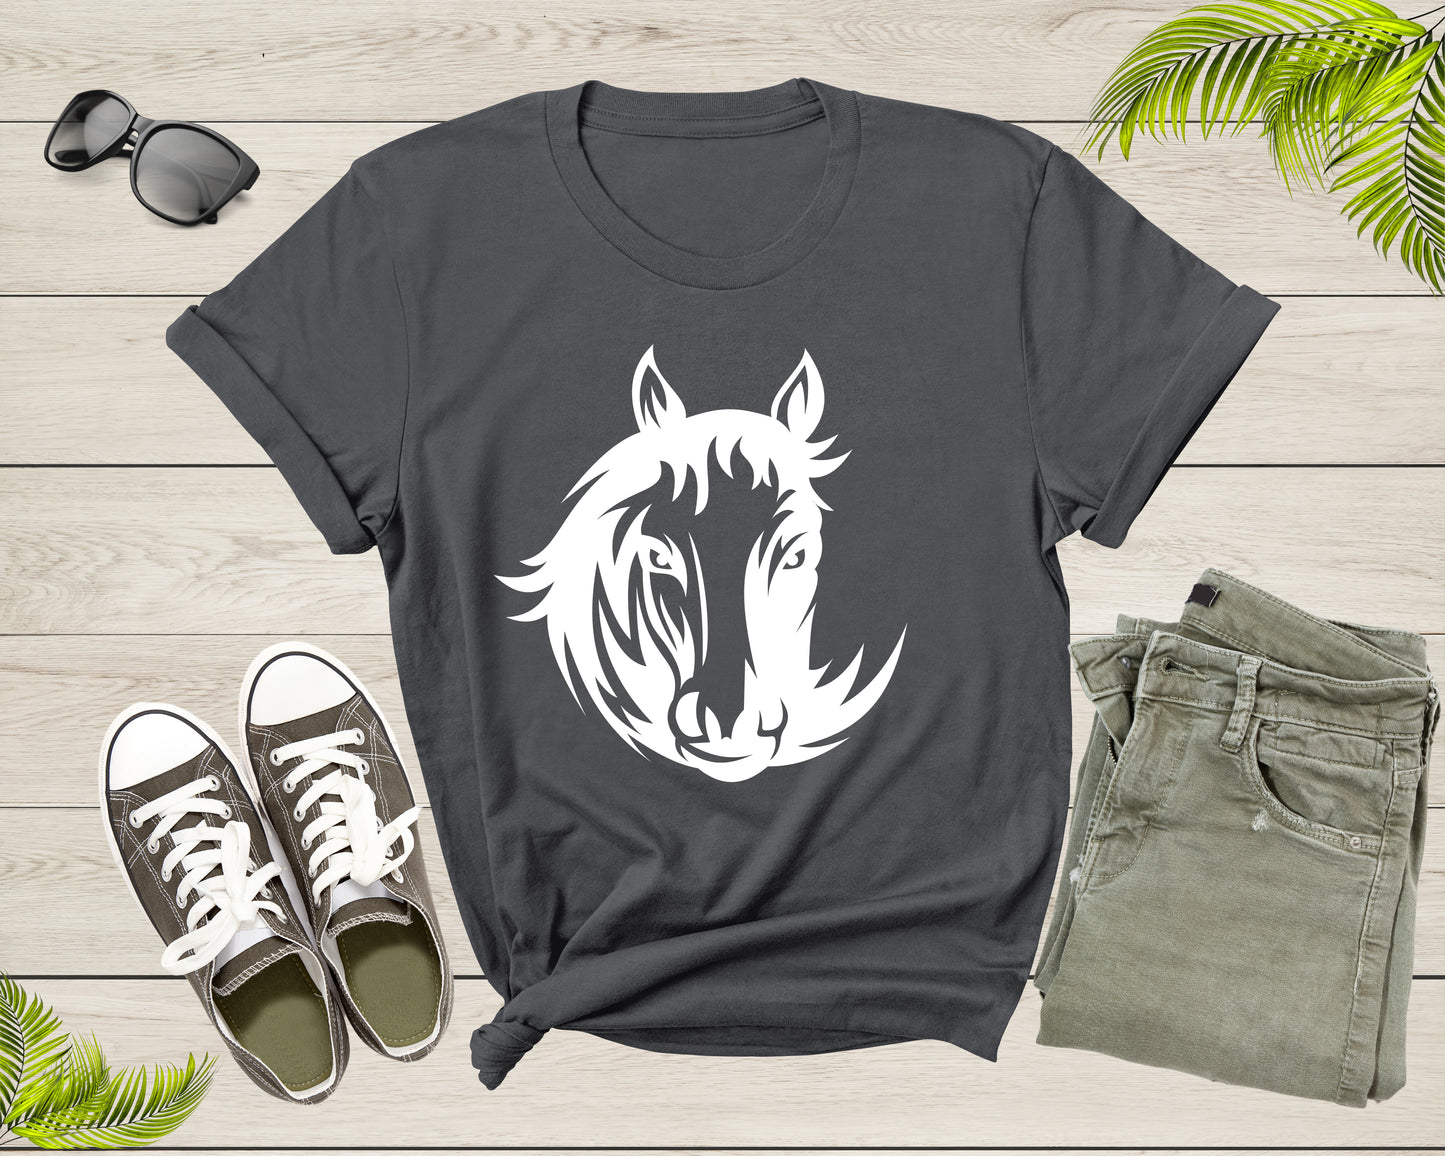 Cool Horse Pony Lover Gift Shirt For Men Women Kids Girls Boys Aesthetic Horse Lover Gift Ideas Tshirt Graphic Horse Head Silhouette T-shirt